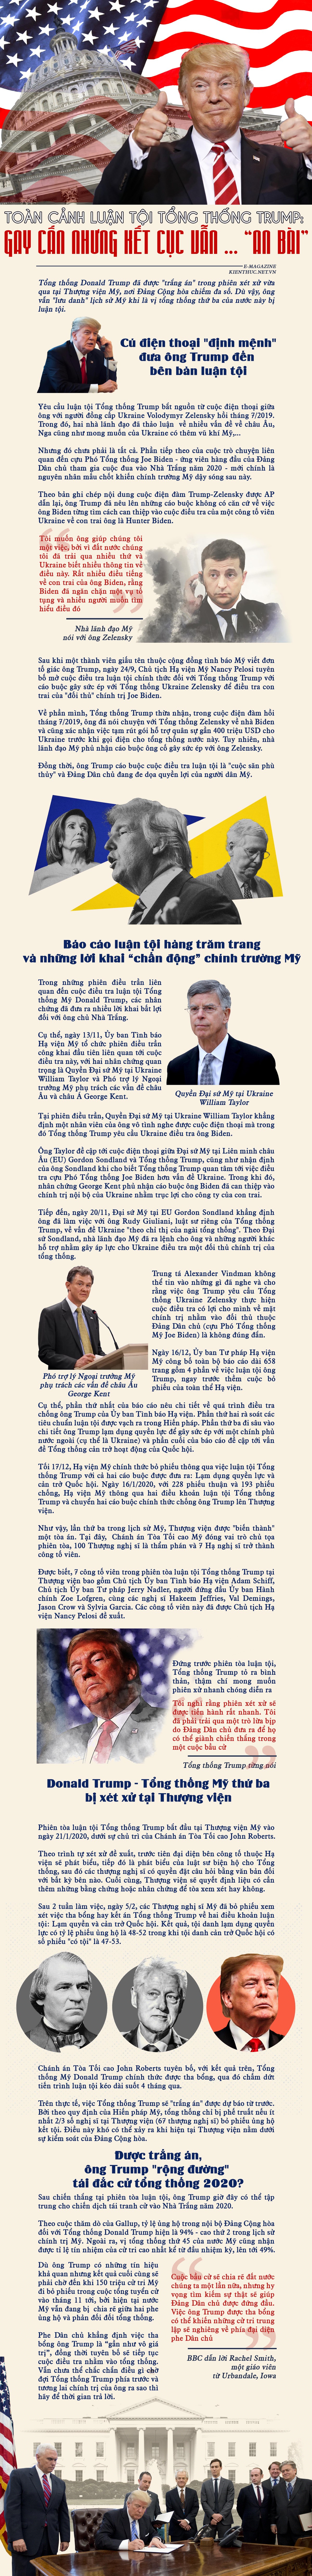 e-Magazine: Ket qua luan toi Tong thong Donald Trump co phai da som 